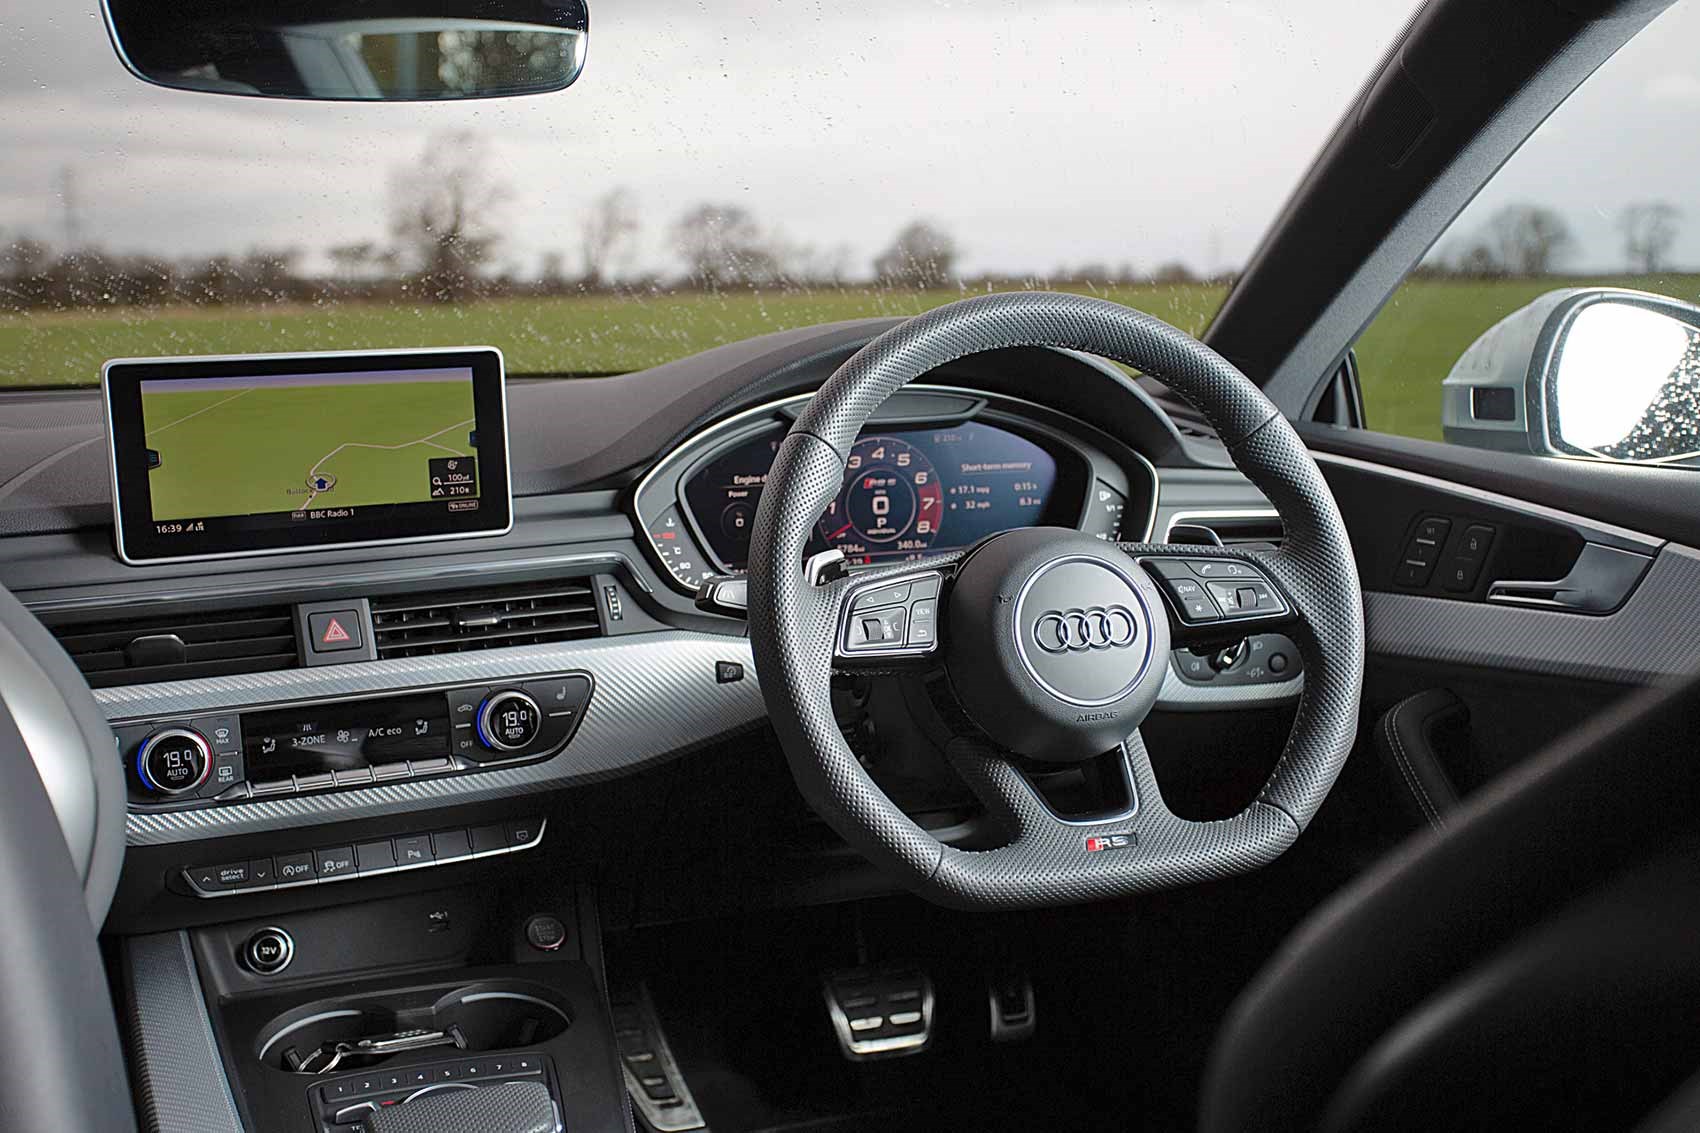 Inside Audi, Audi quattro® all-wheel-drive